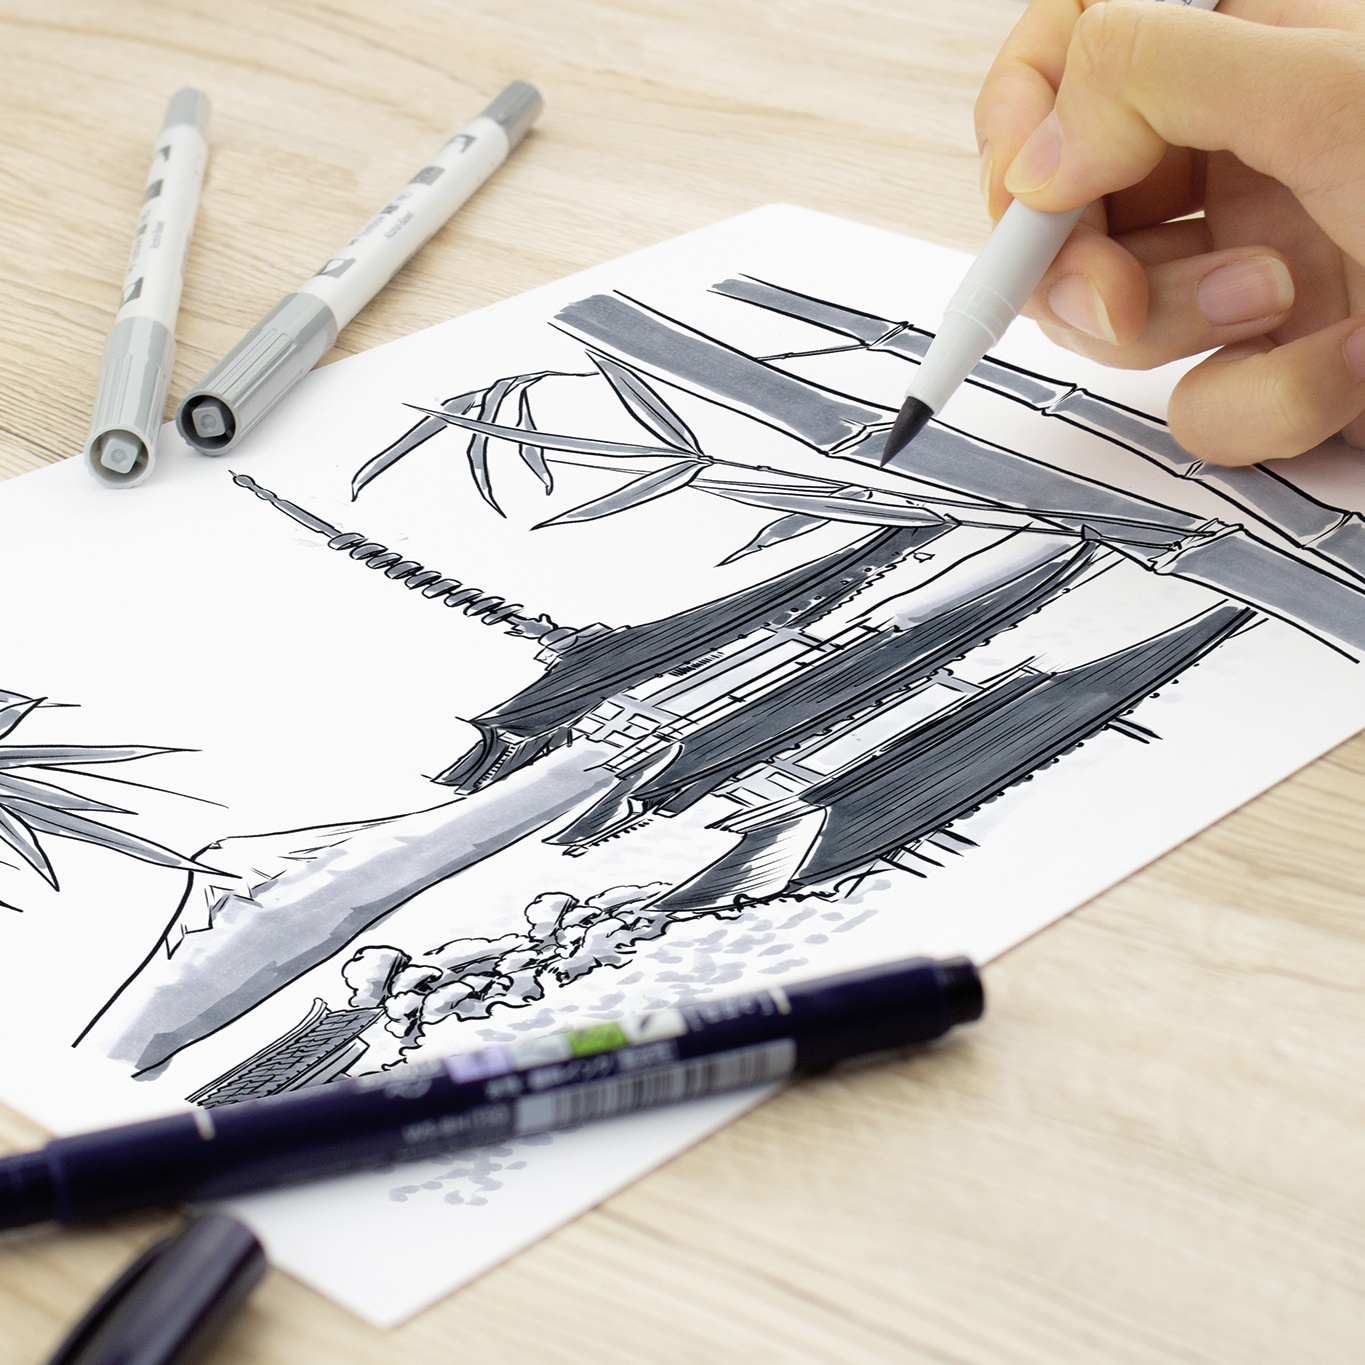 ABT PRO Dual Brush Pen 12er-Set Basic in der Gruppe Stifte / Künstlerstifte / Pinselstifte bei Pen Store (101254)